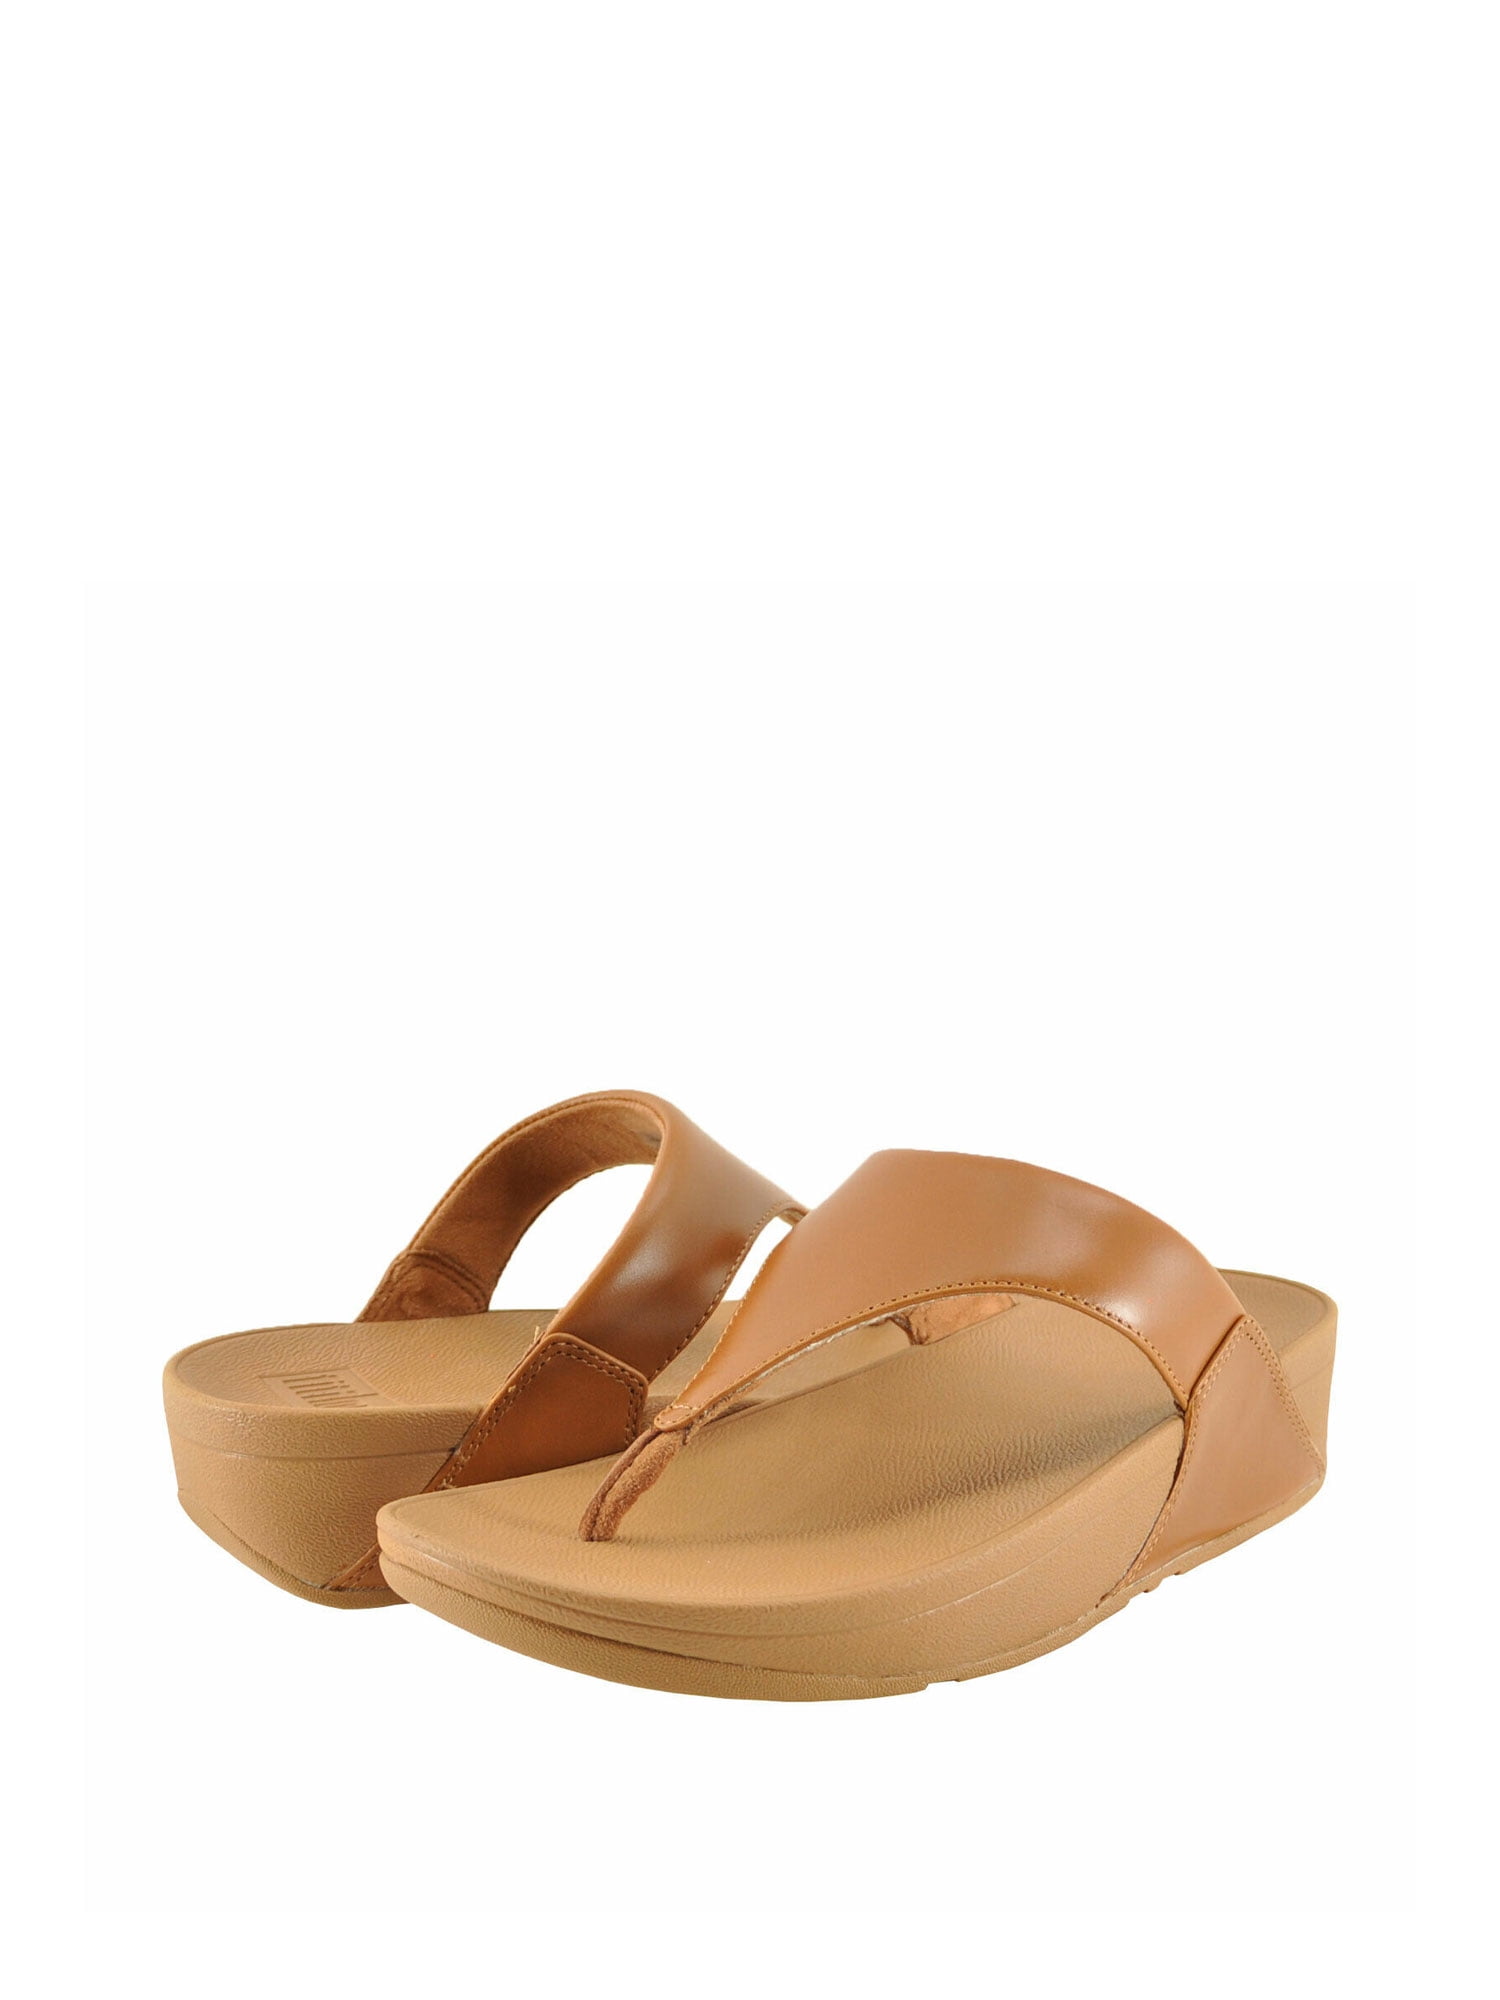 Fitflop Lulu Women's Leather Toe Thong Wedge Sandals I88-592 - Walmart.com